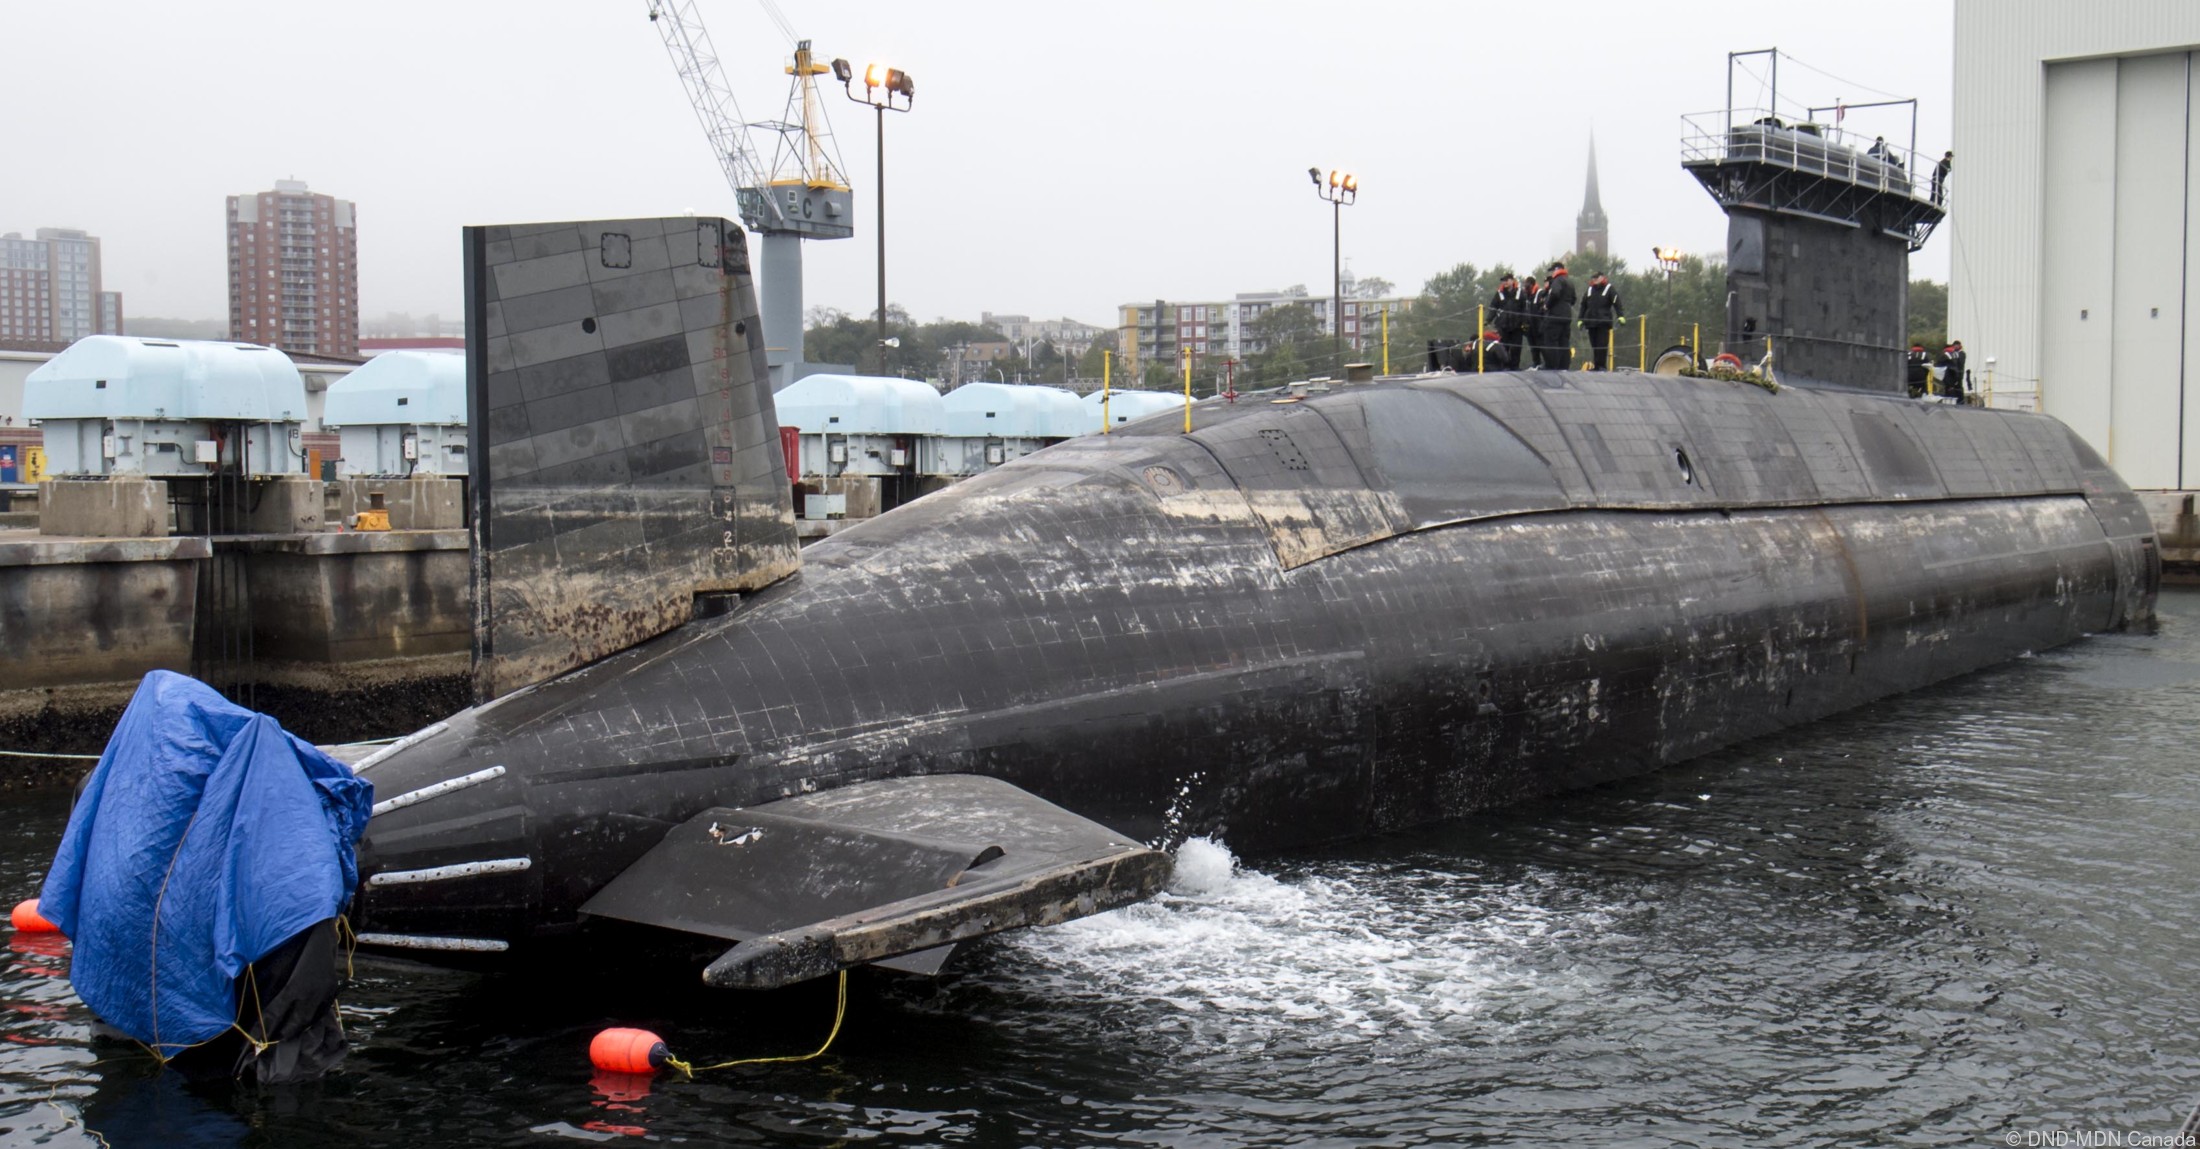 ssk-877 hmcs windsor victoria upholder class attack submarine hunter killer ncsm royal canadian navy 07